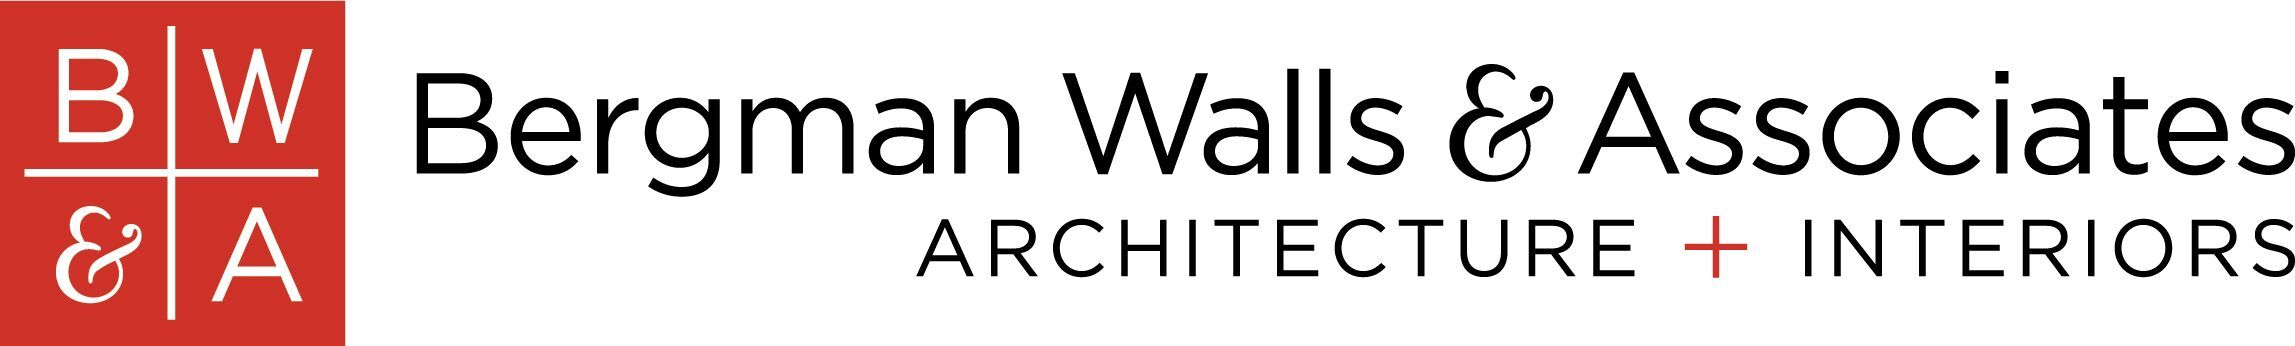 Bergman Walls & Associates Architecture + Interiors